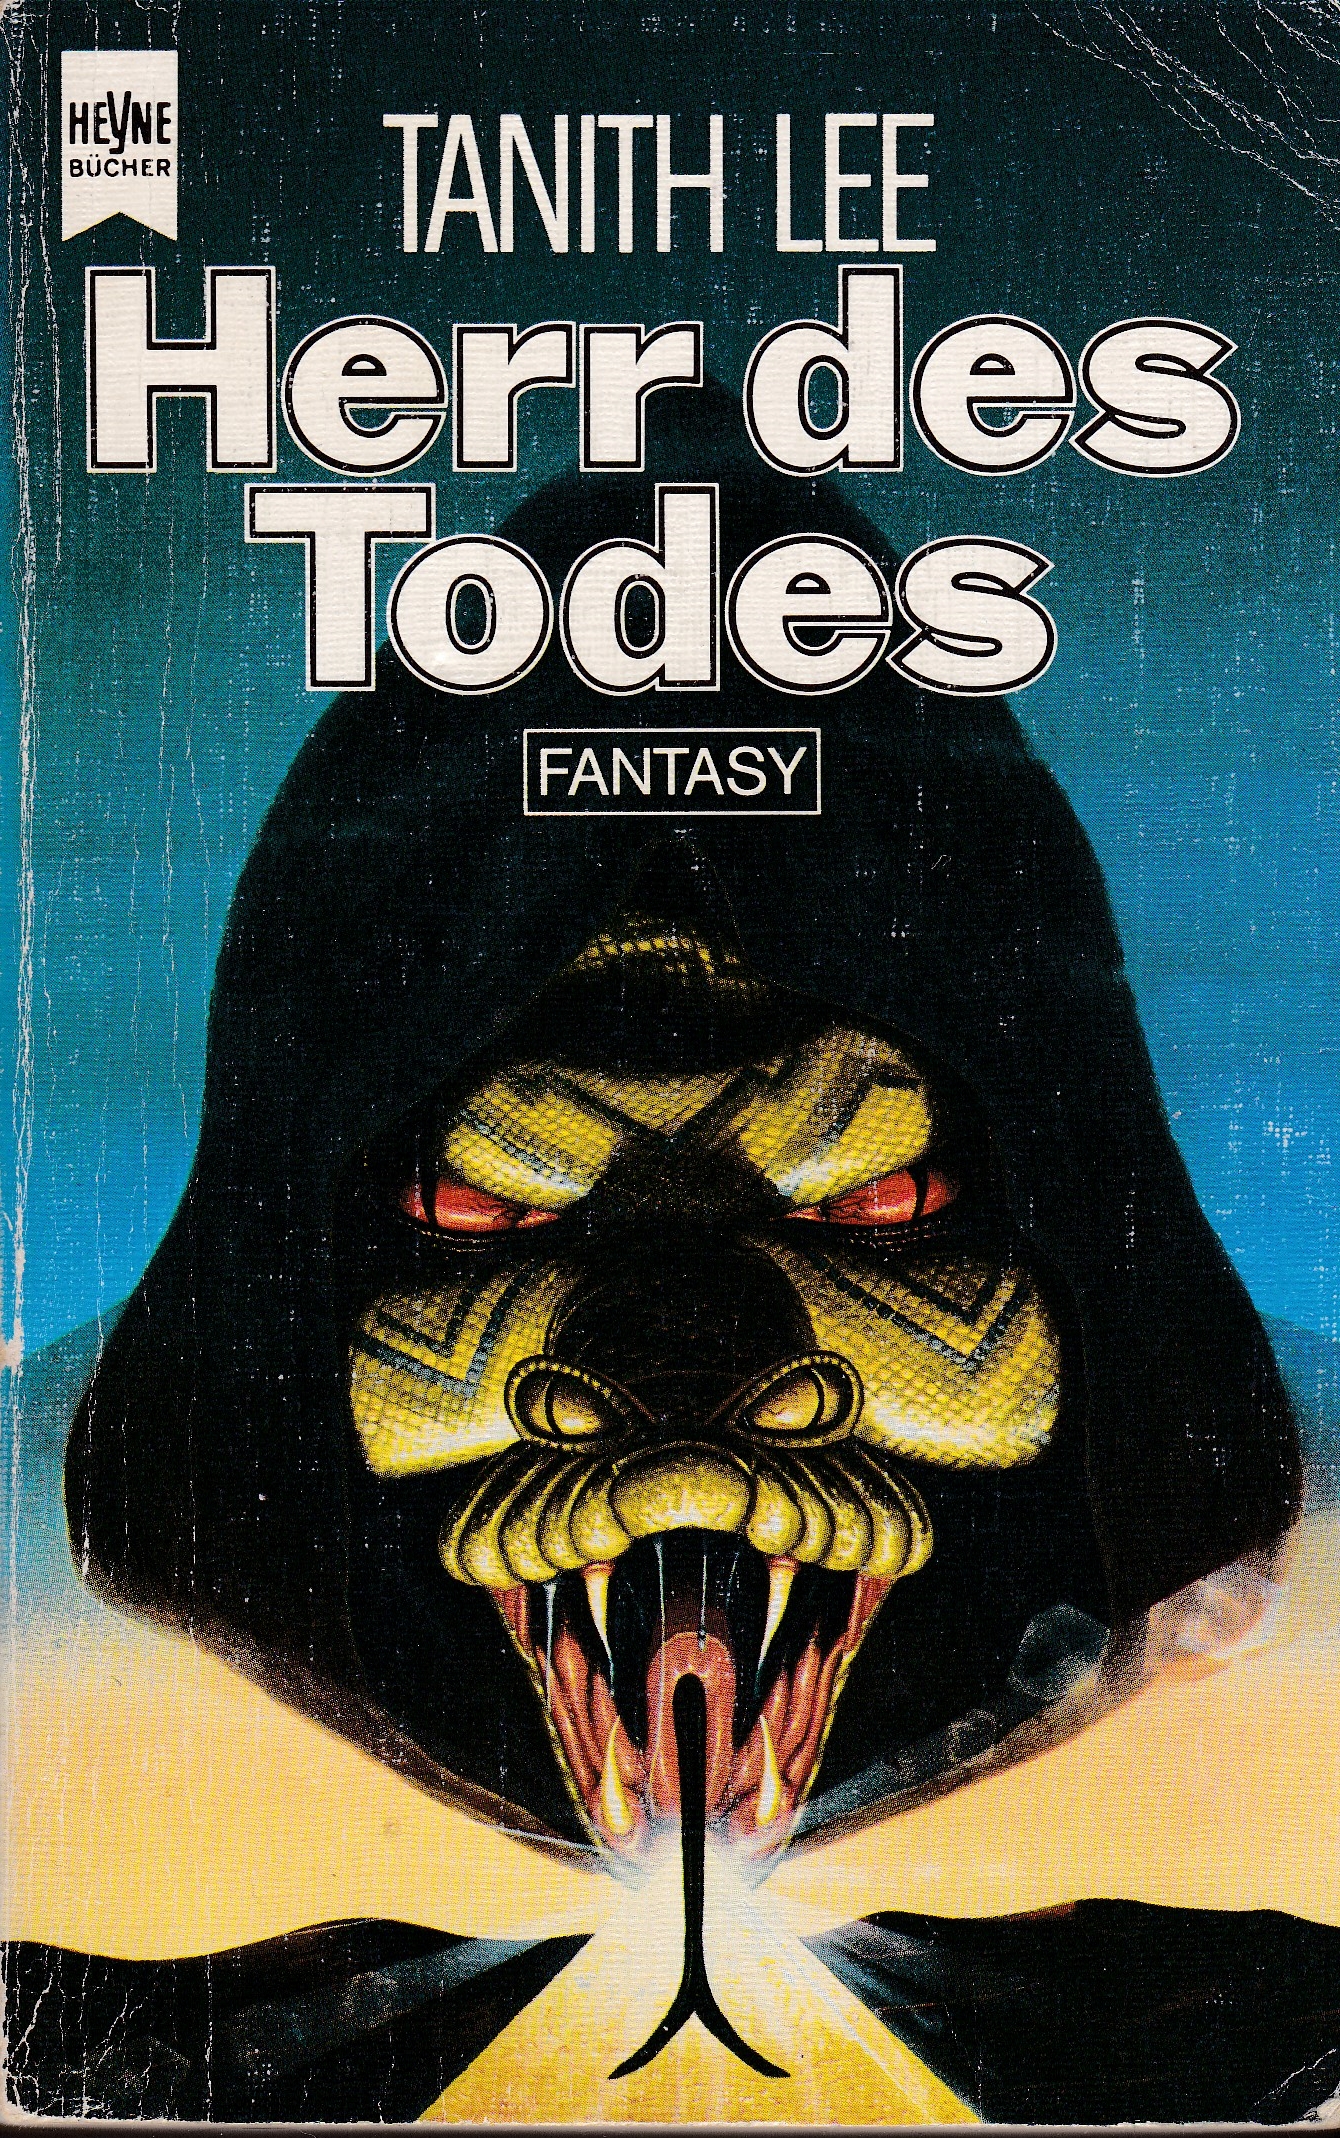 Herr Des Todes (Death's Master)